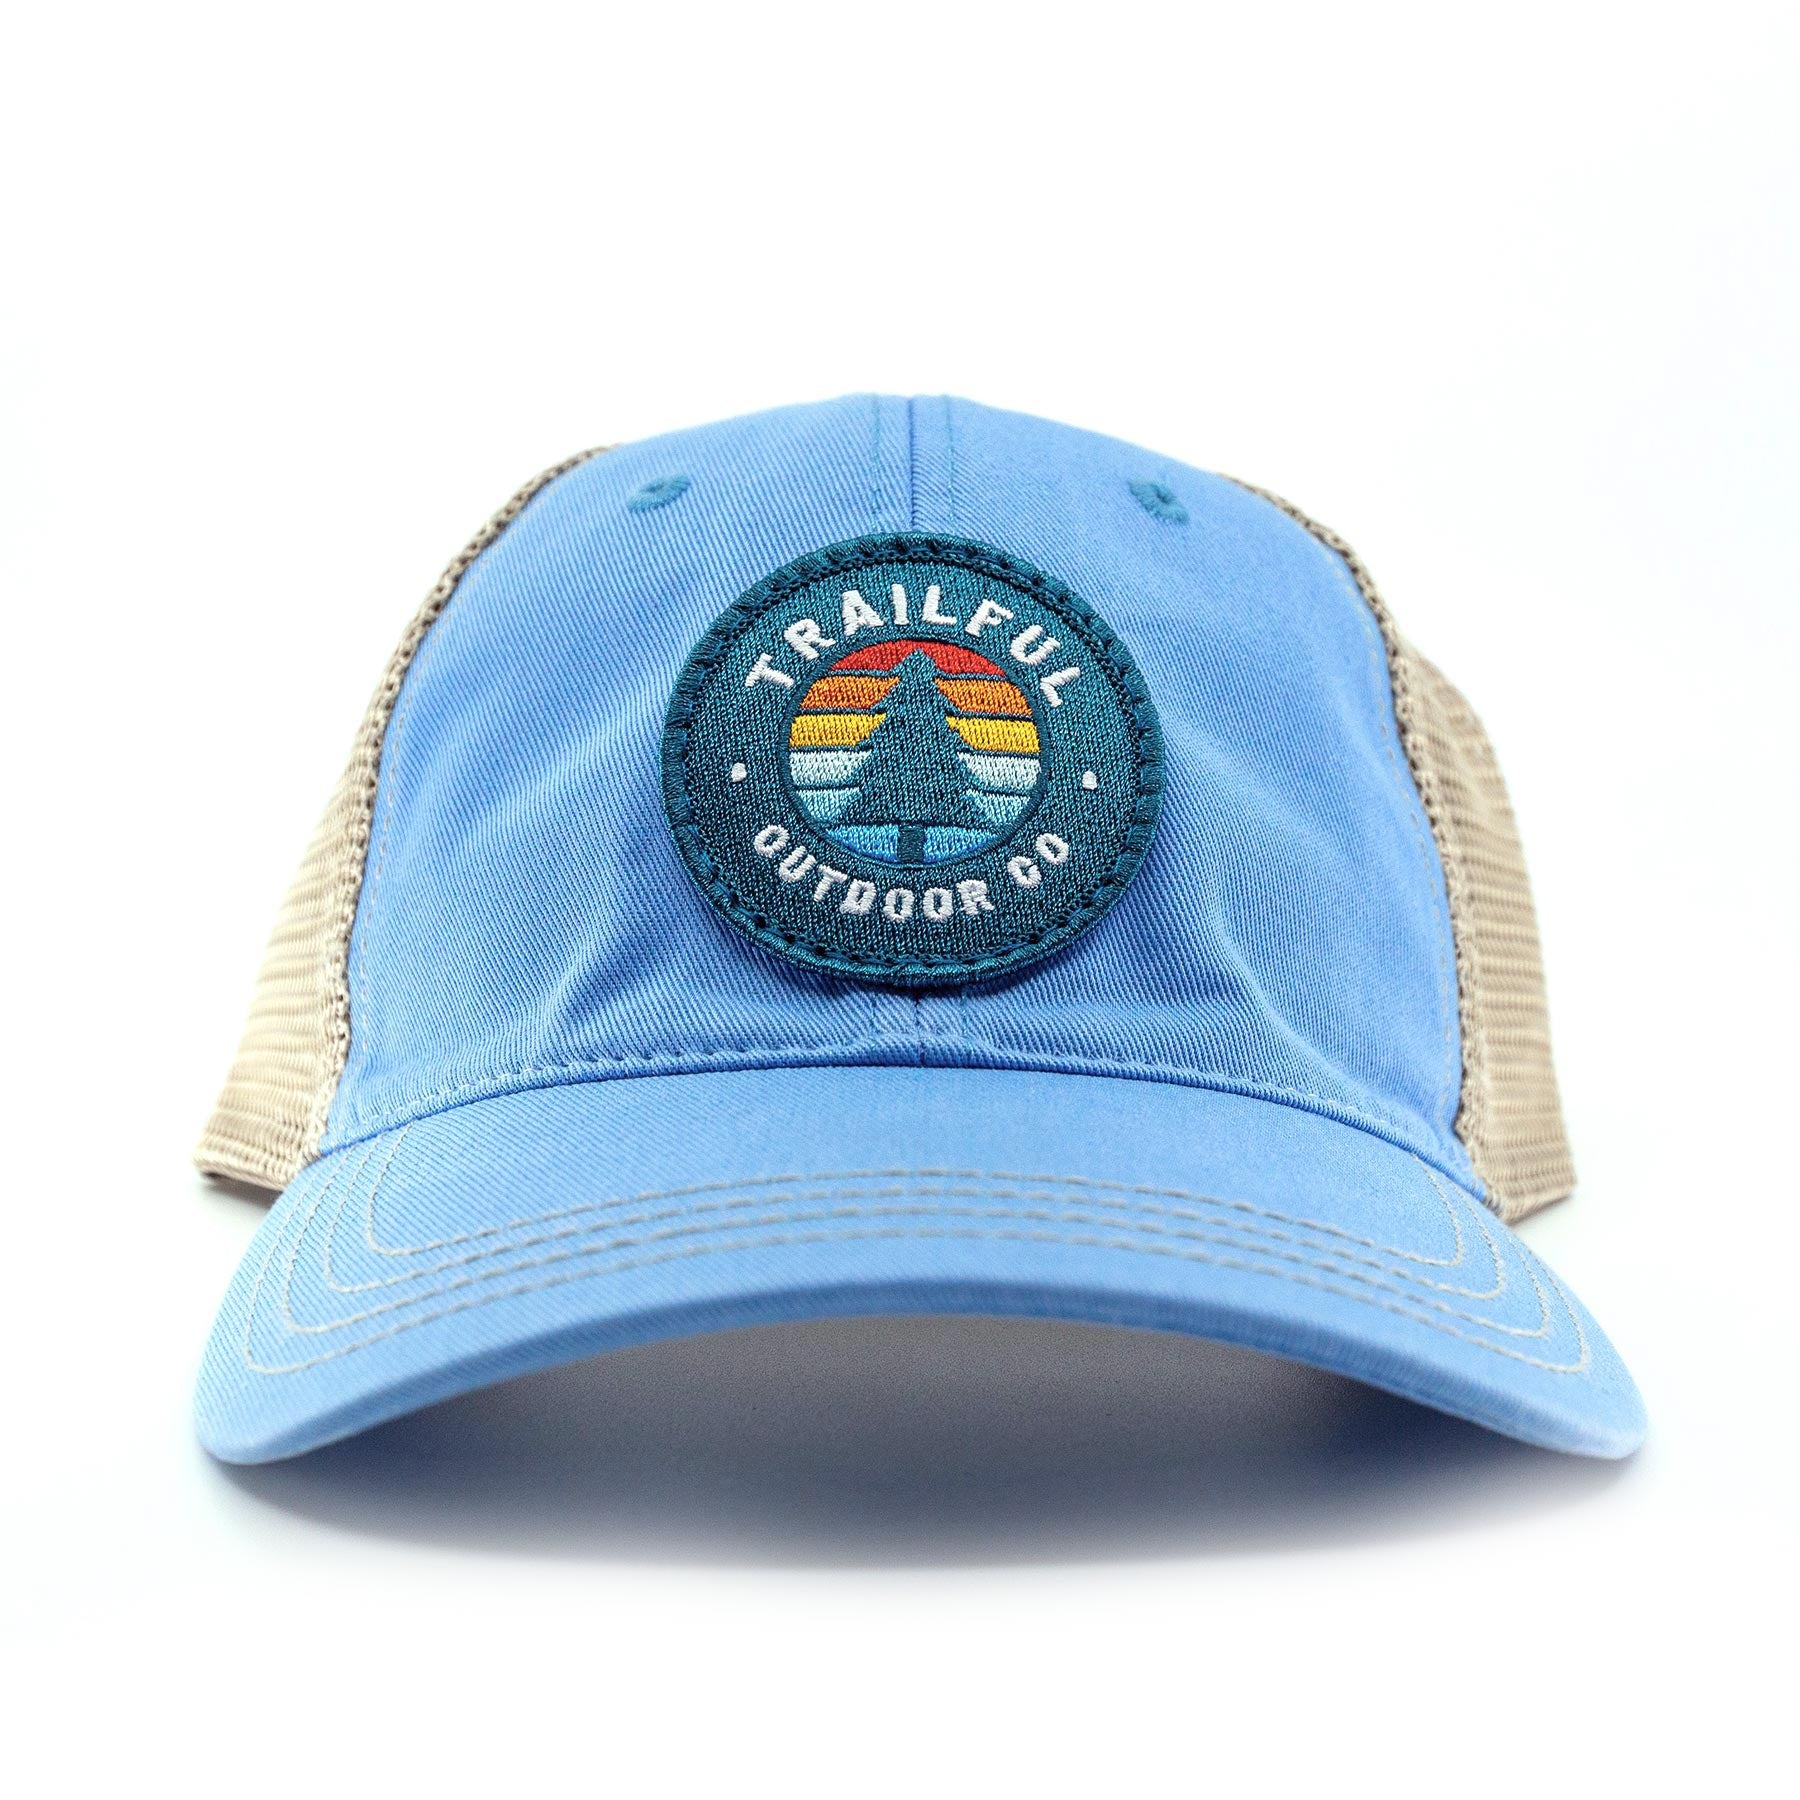 Trailful Southern Pine Garment Washed Trucker Hat - Columbia Blue/Khaki